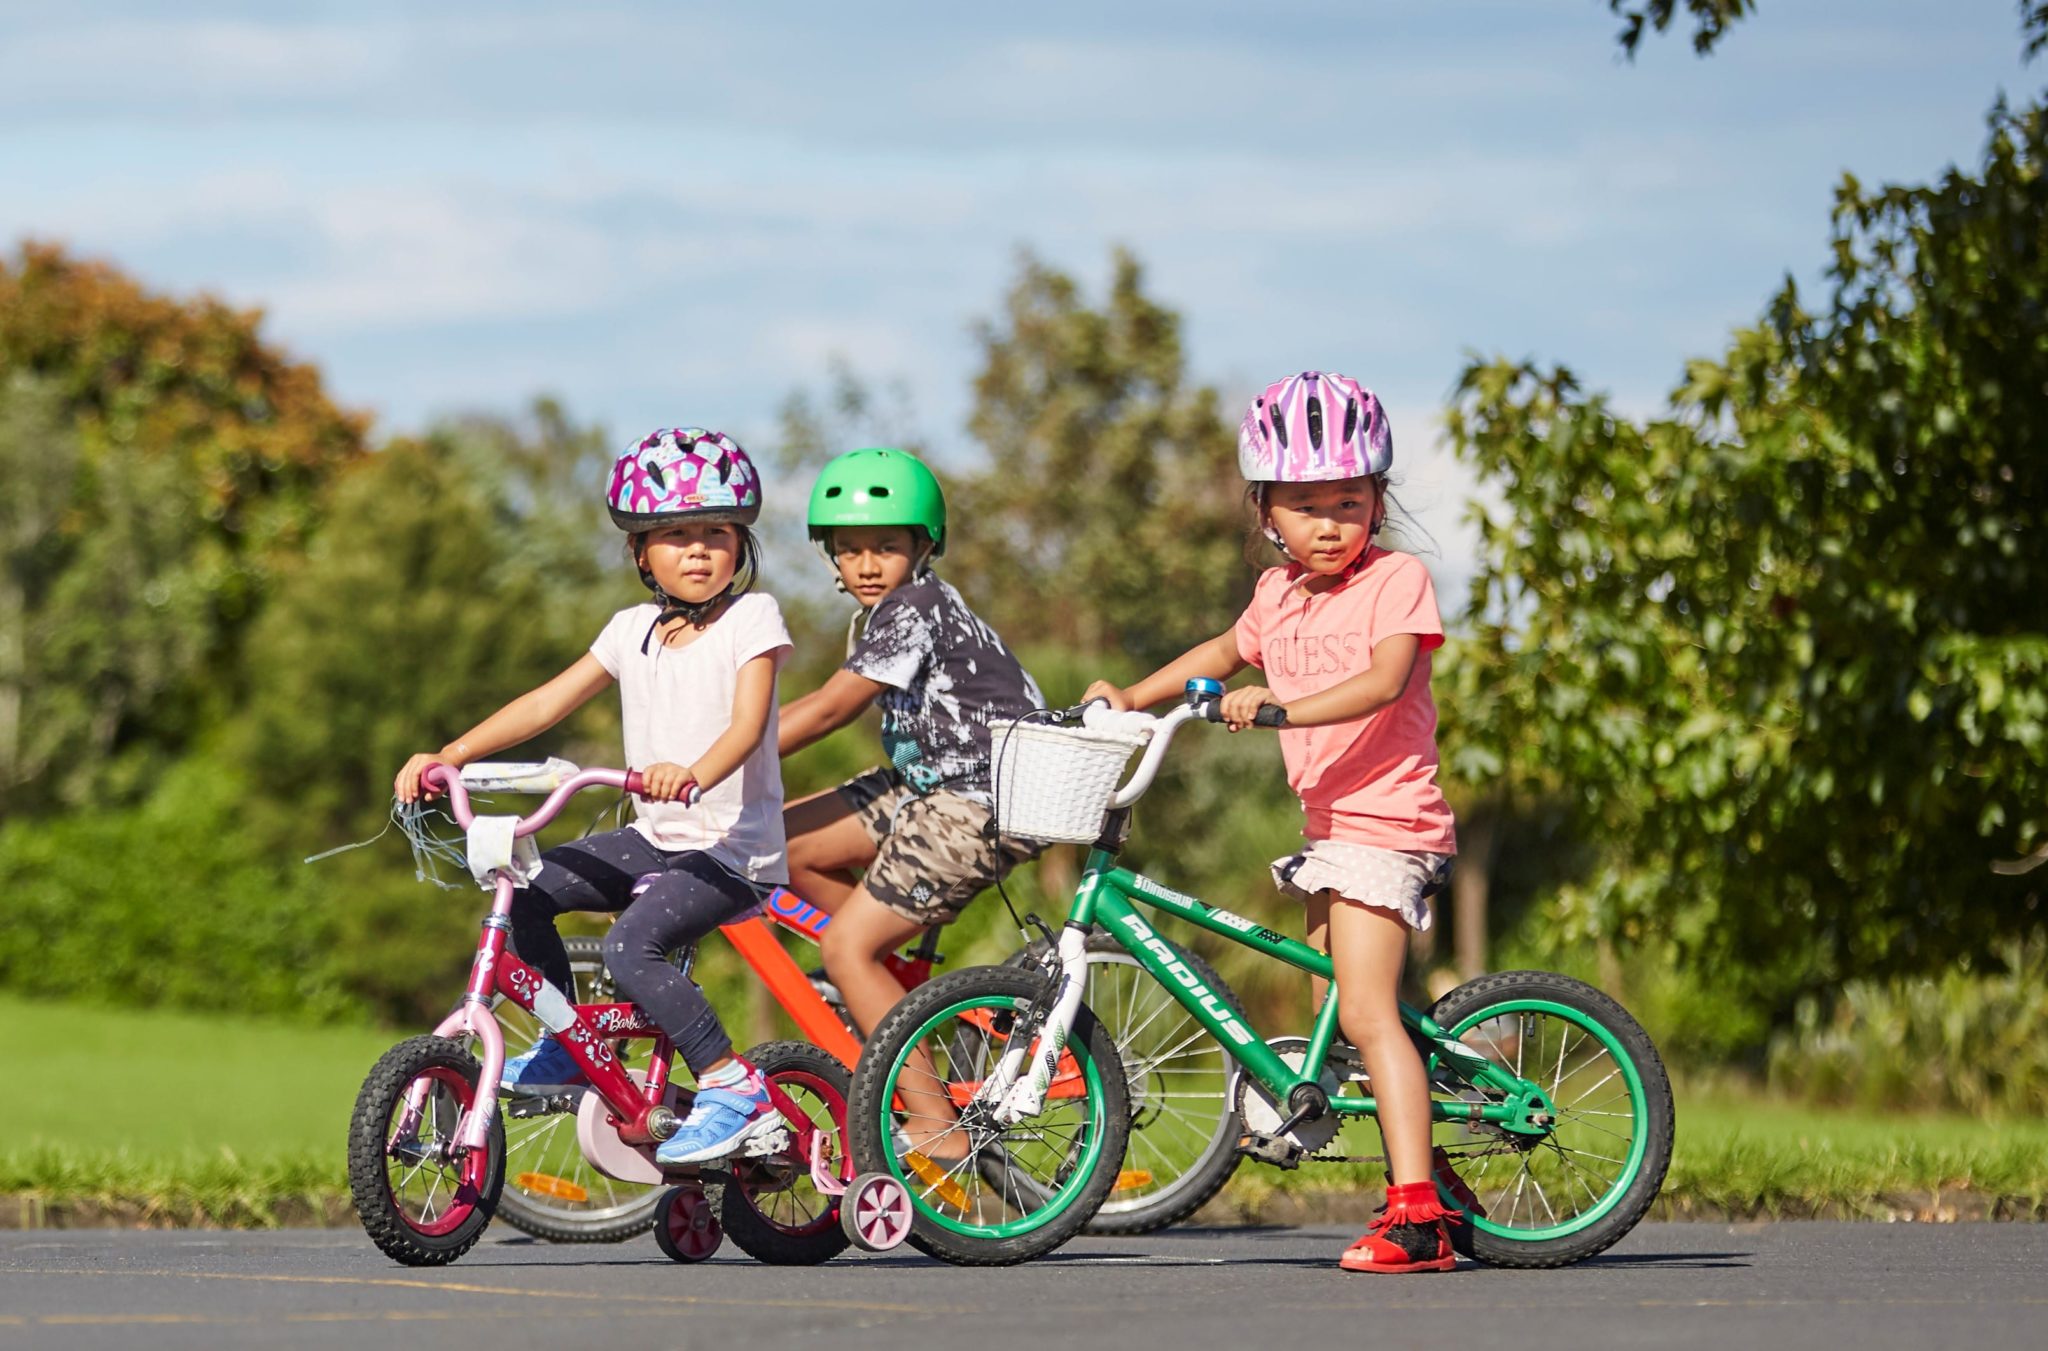 Children riding Bicycles.